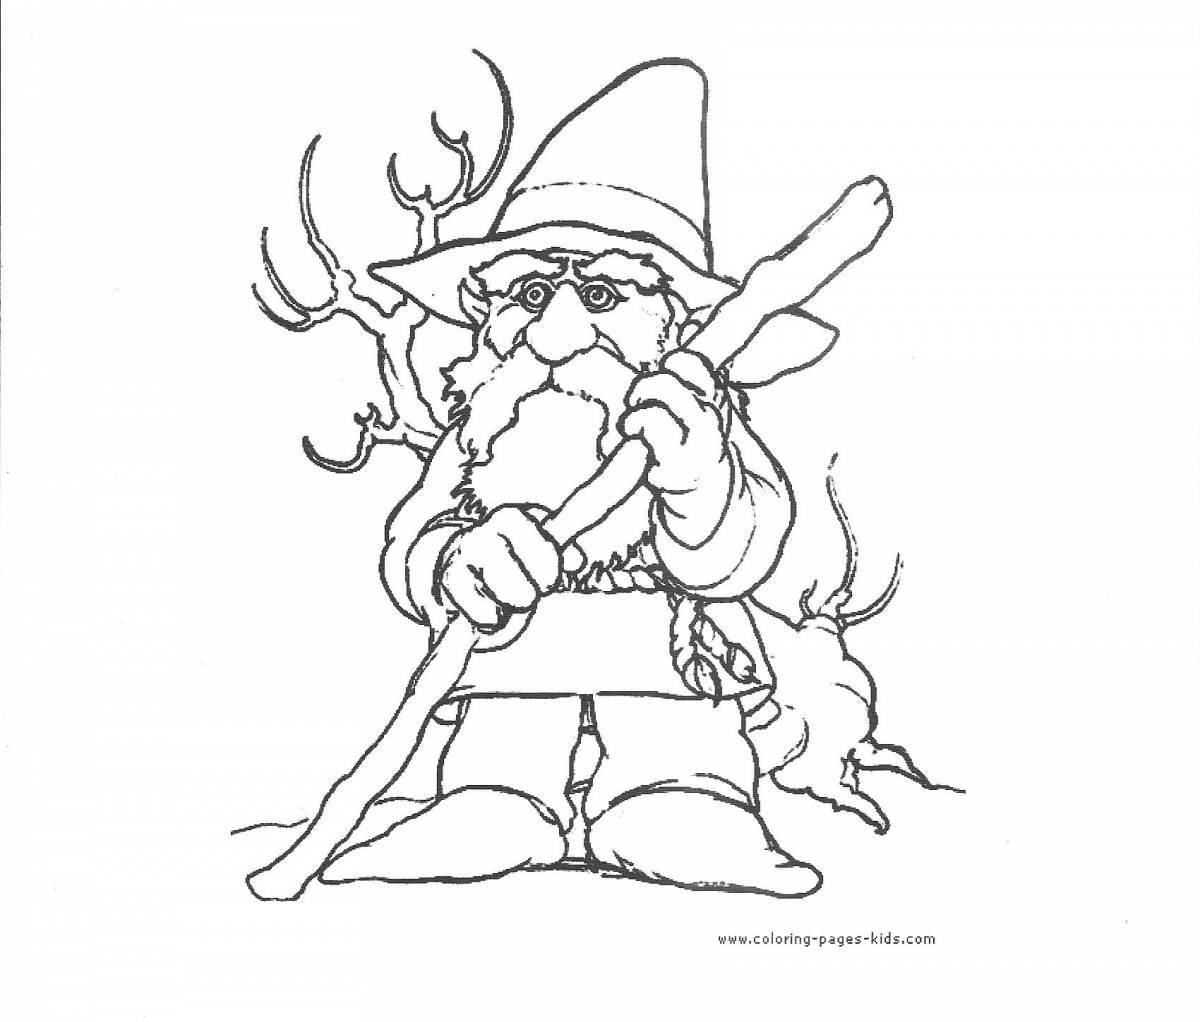 Magic goblin coloring page